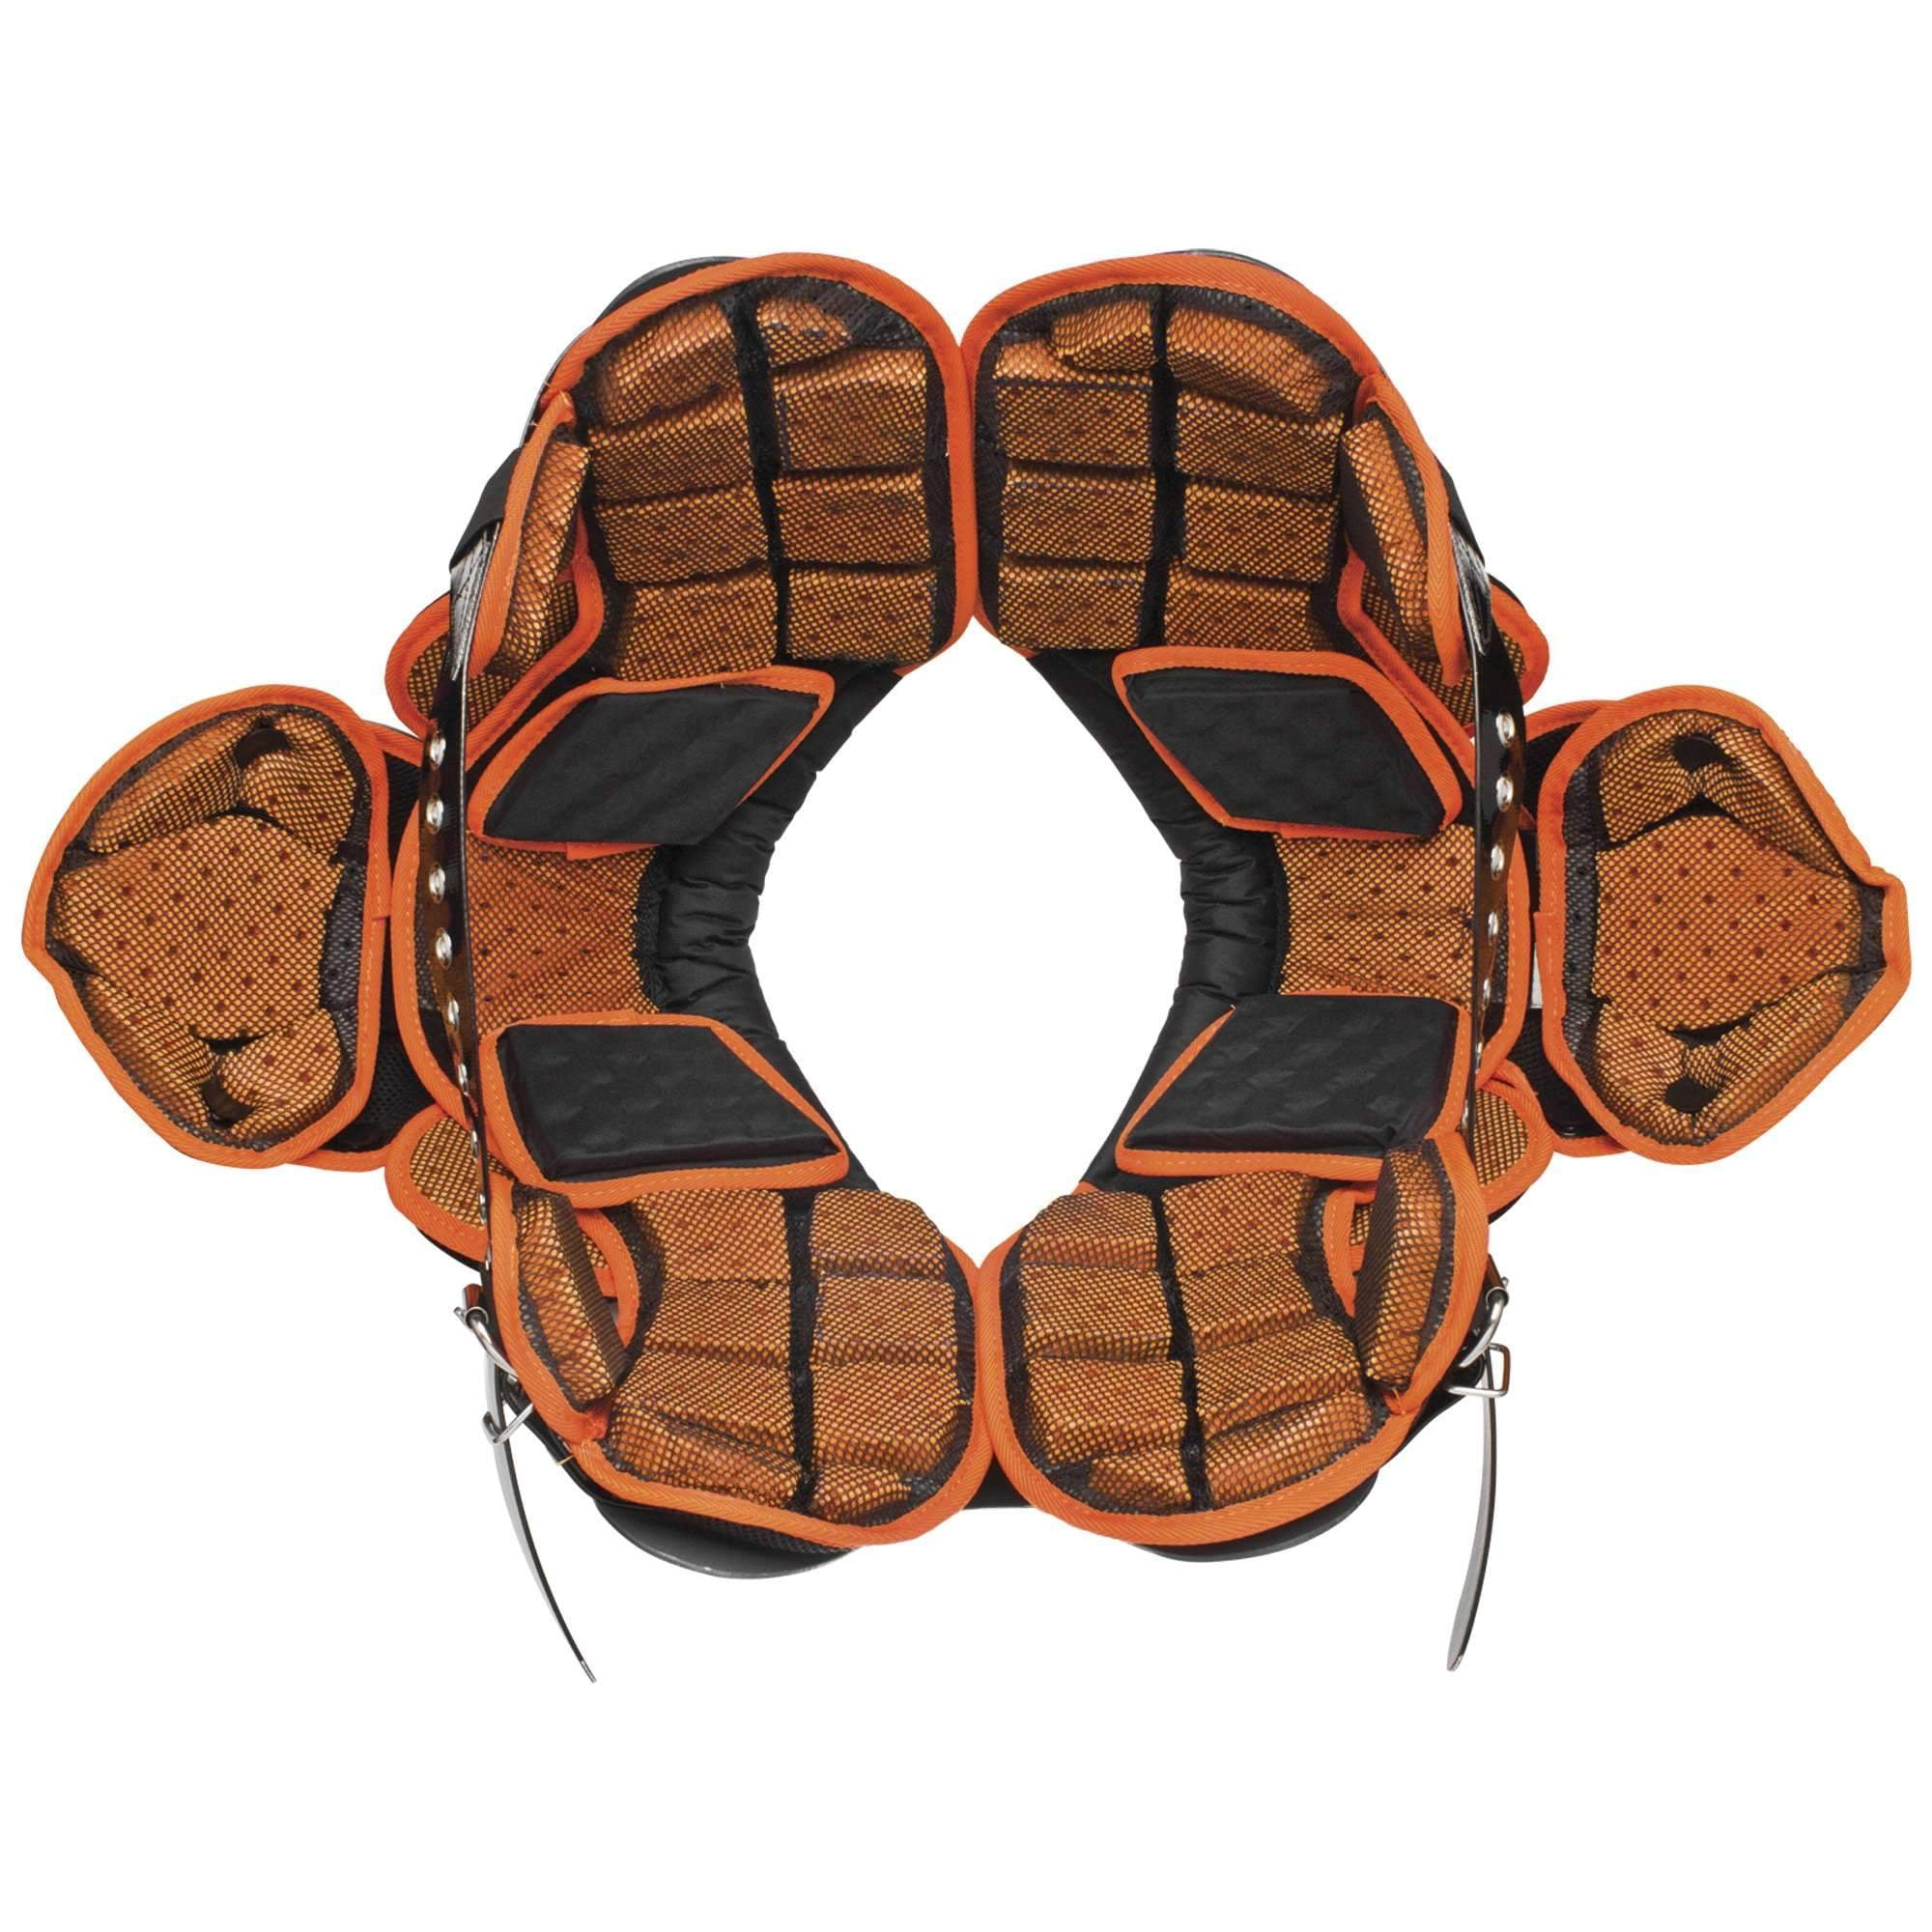 Schutt Sports Varsity XV HD Shoulder Pad Football Gear and Accessories 